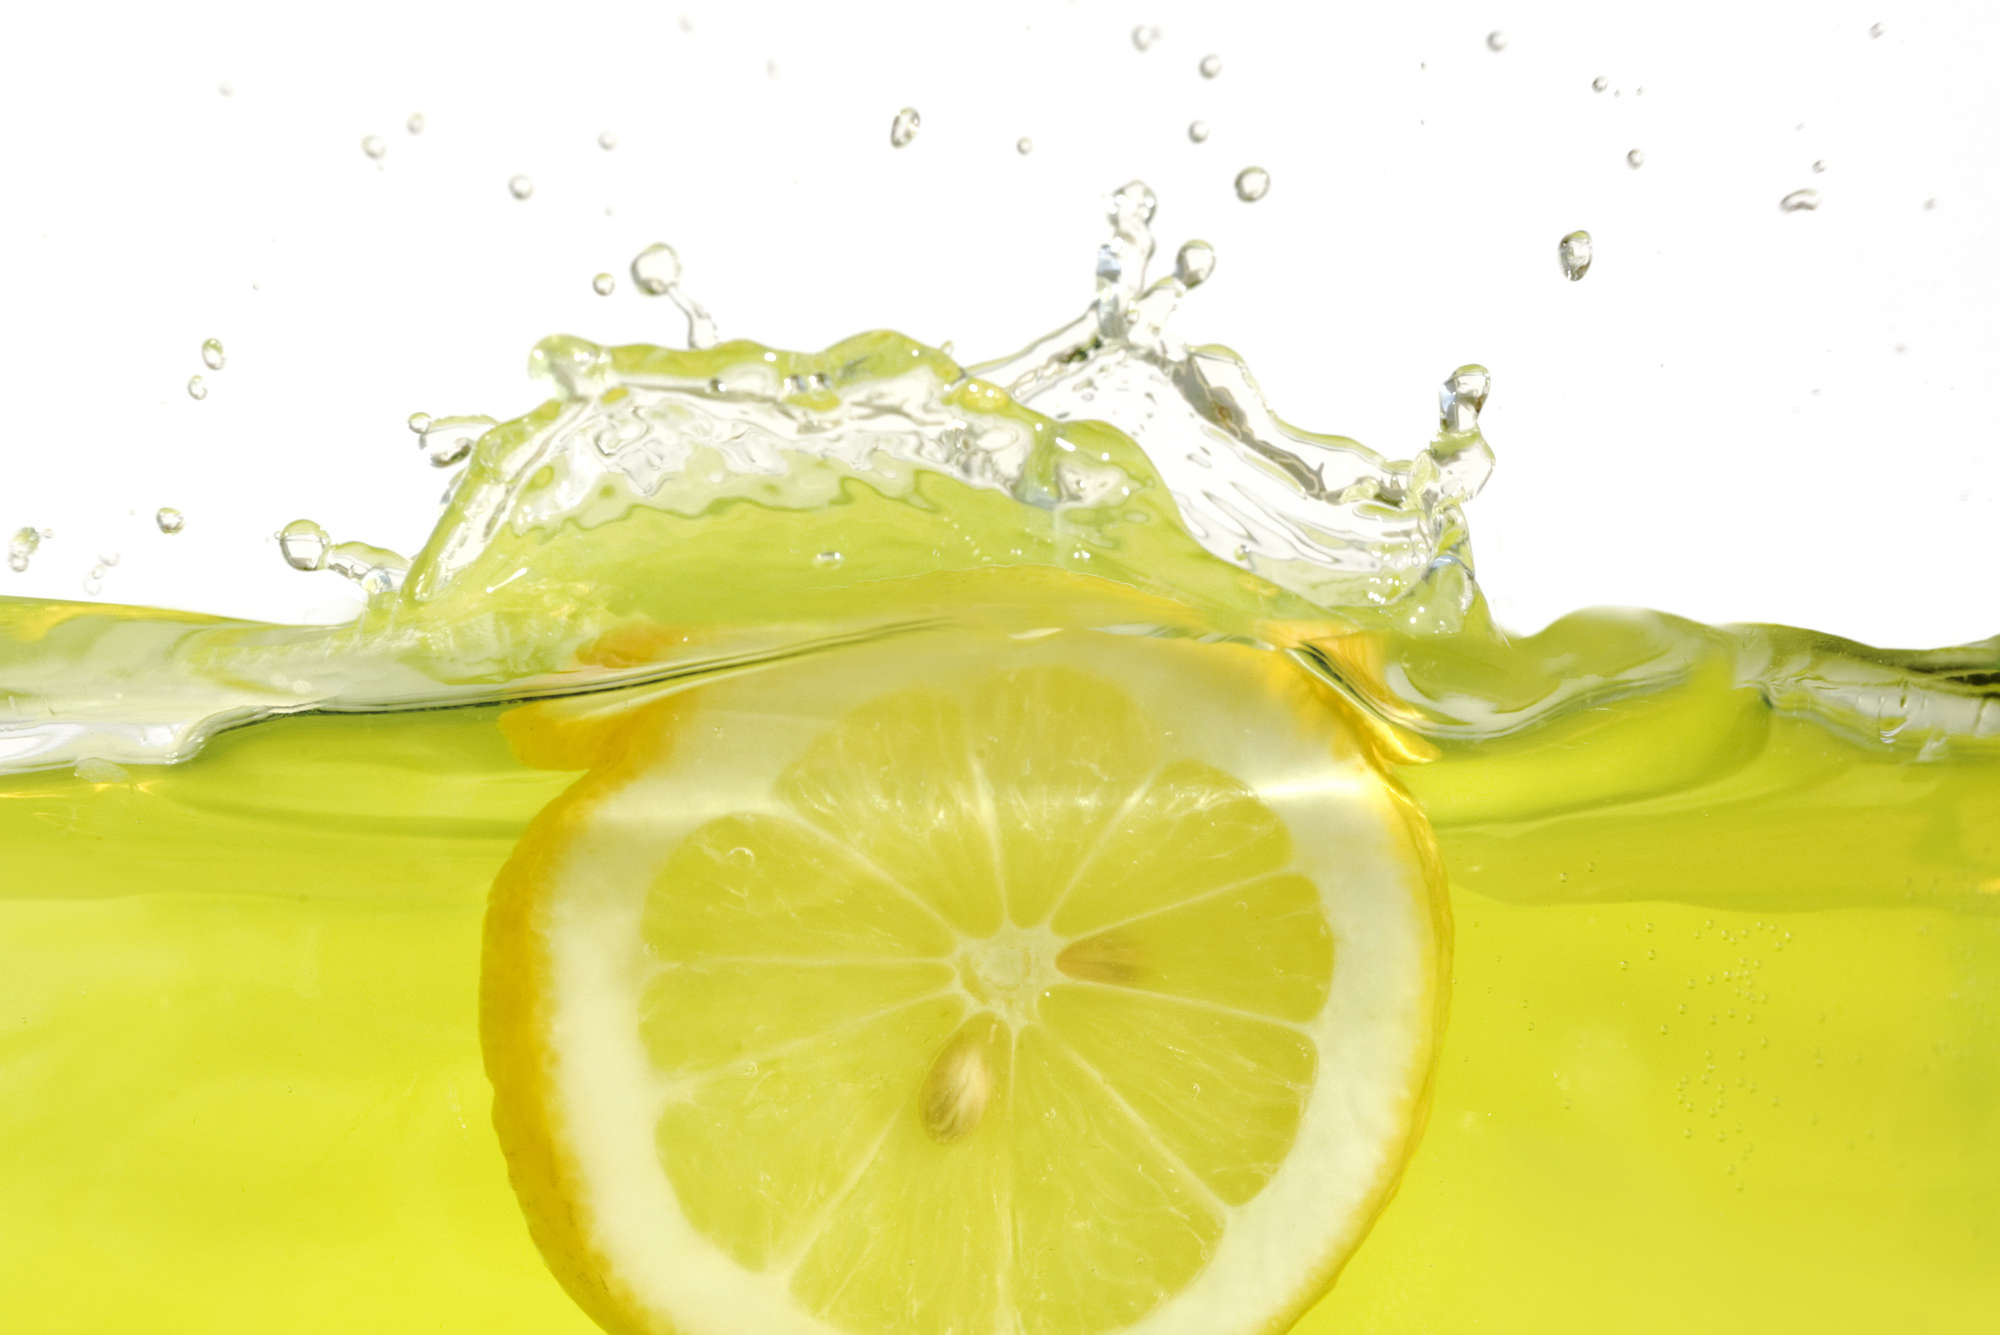             Lemon in the Water Wallpaper - Matt Smooth Non-woven
        